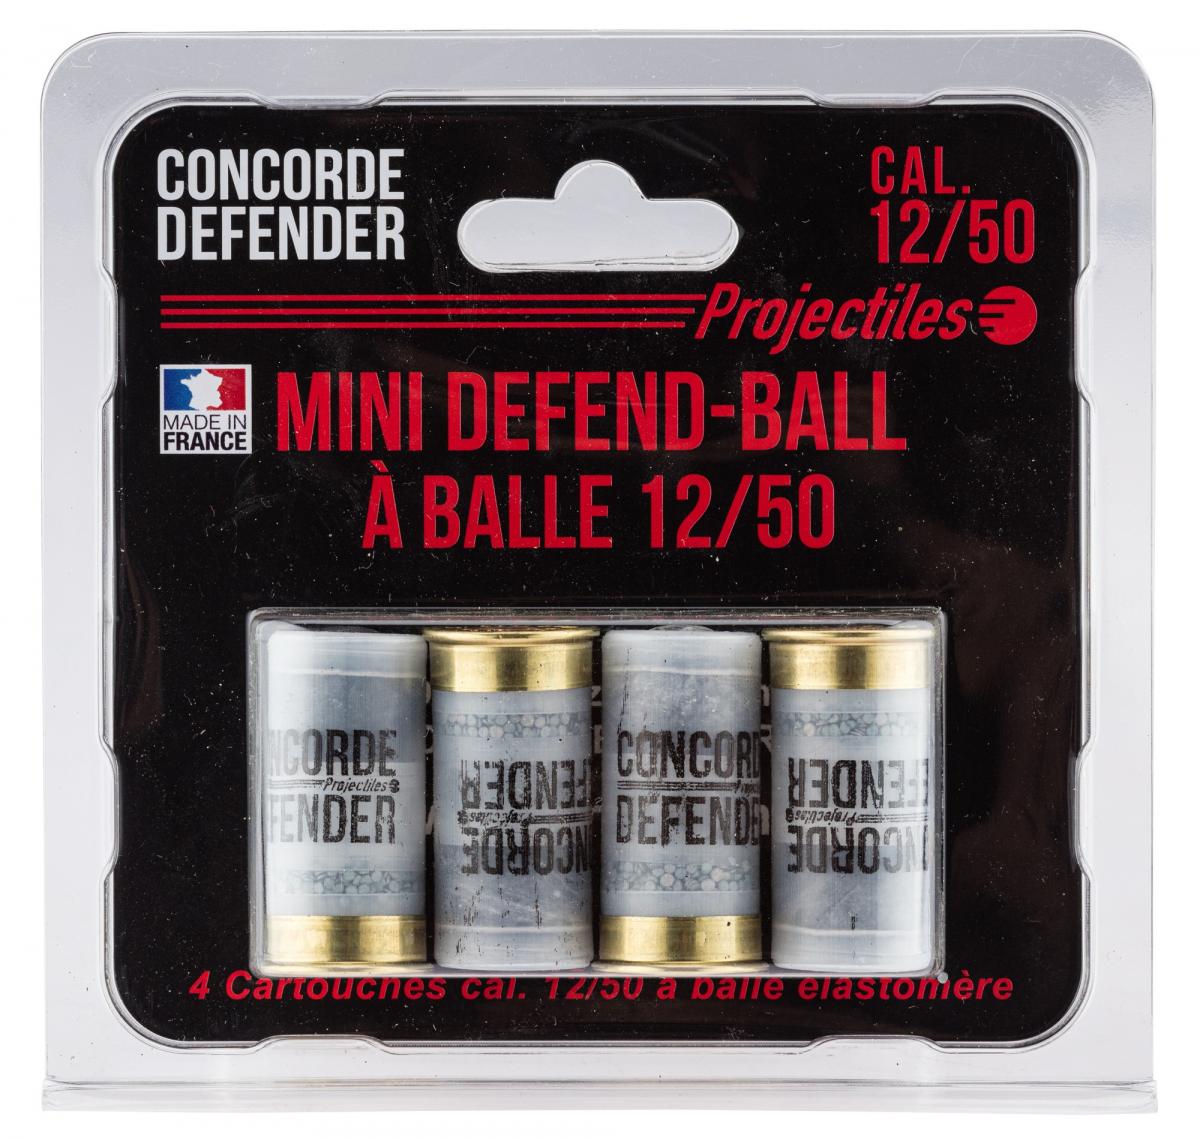 Cartouches Mini Defend-Ball cal. 12/50 à balle Elastomère Bior - Blister de 4 